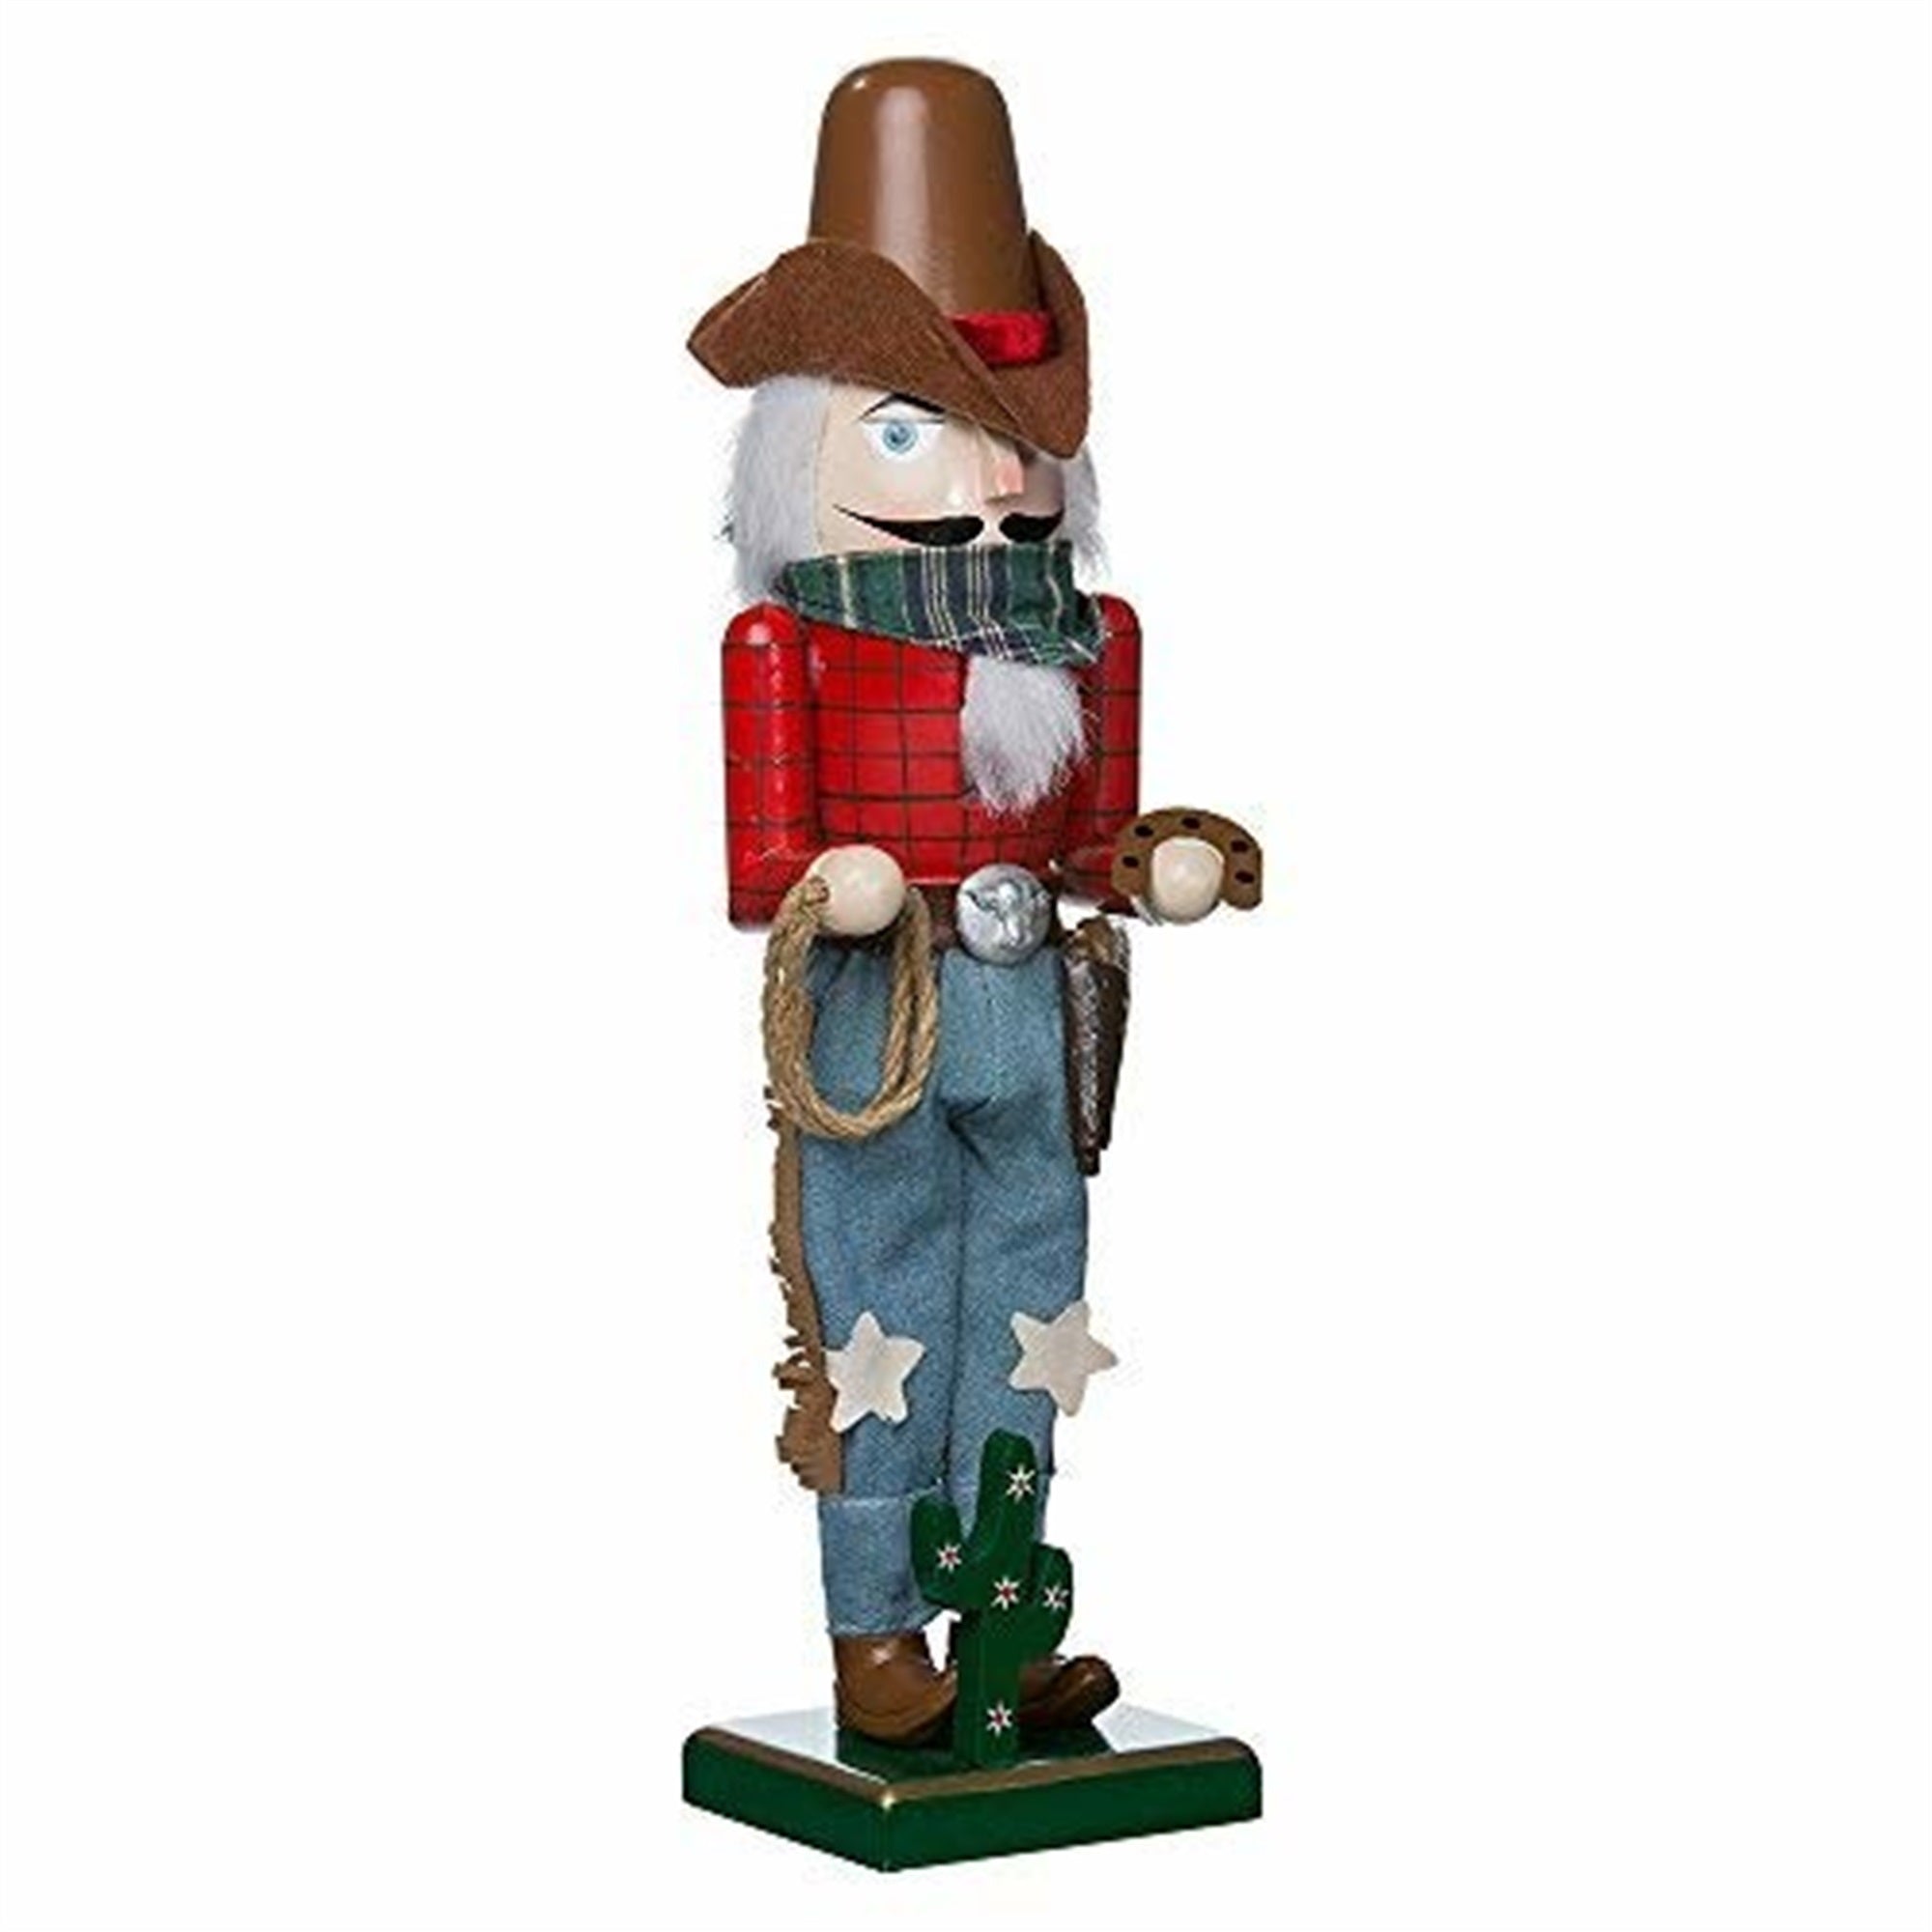 Kurt Adler Wooden Nutcracker Collection, Cowboy with Lasso Nutcracker, 15"